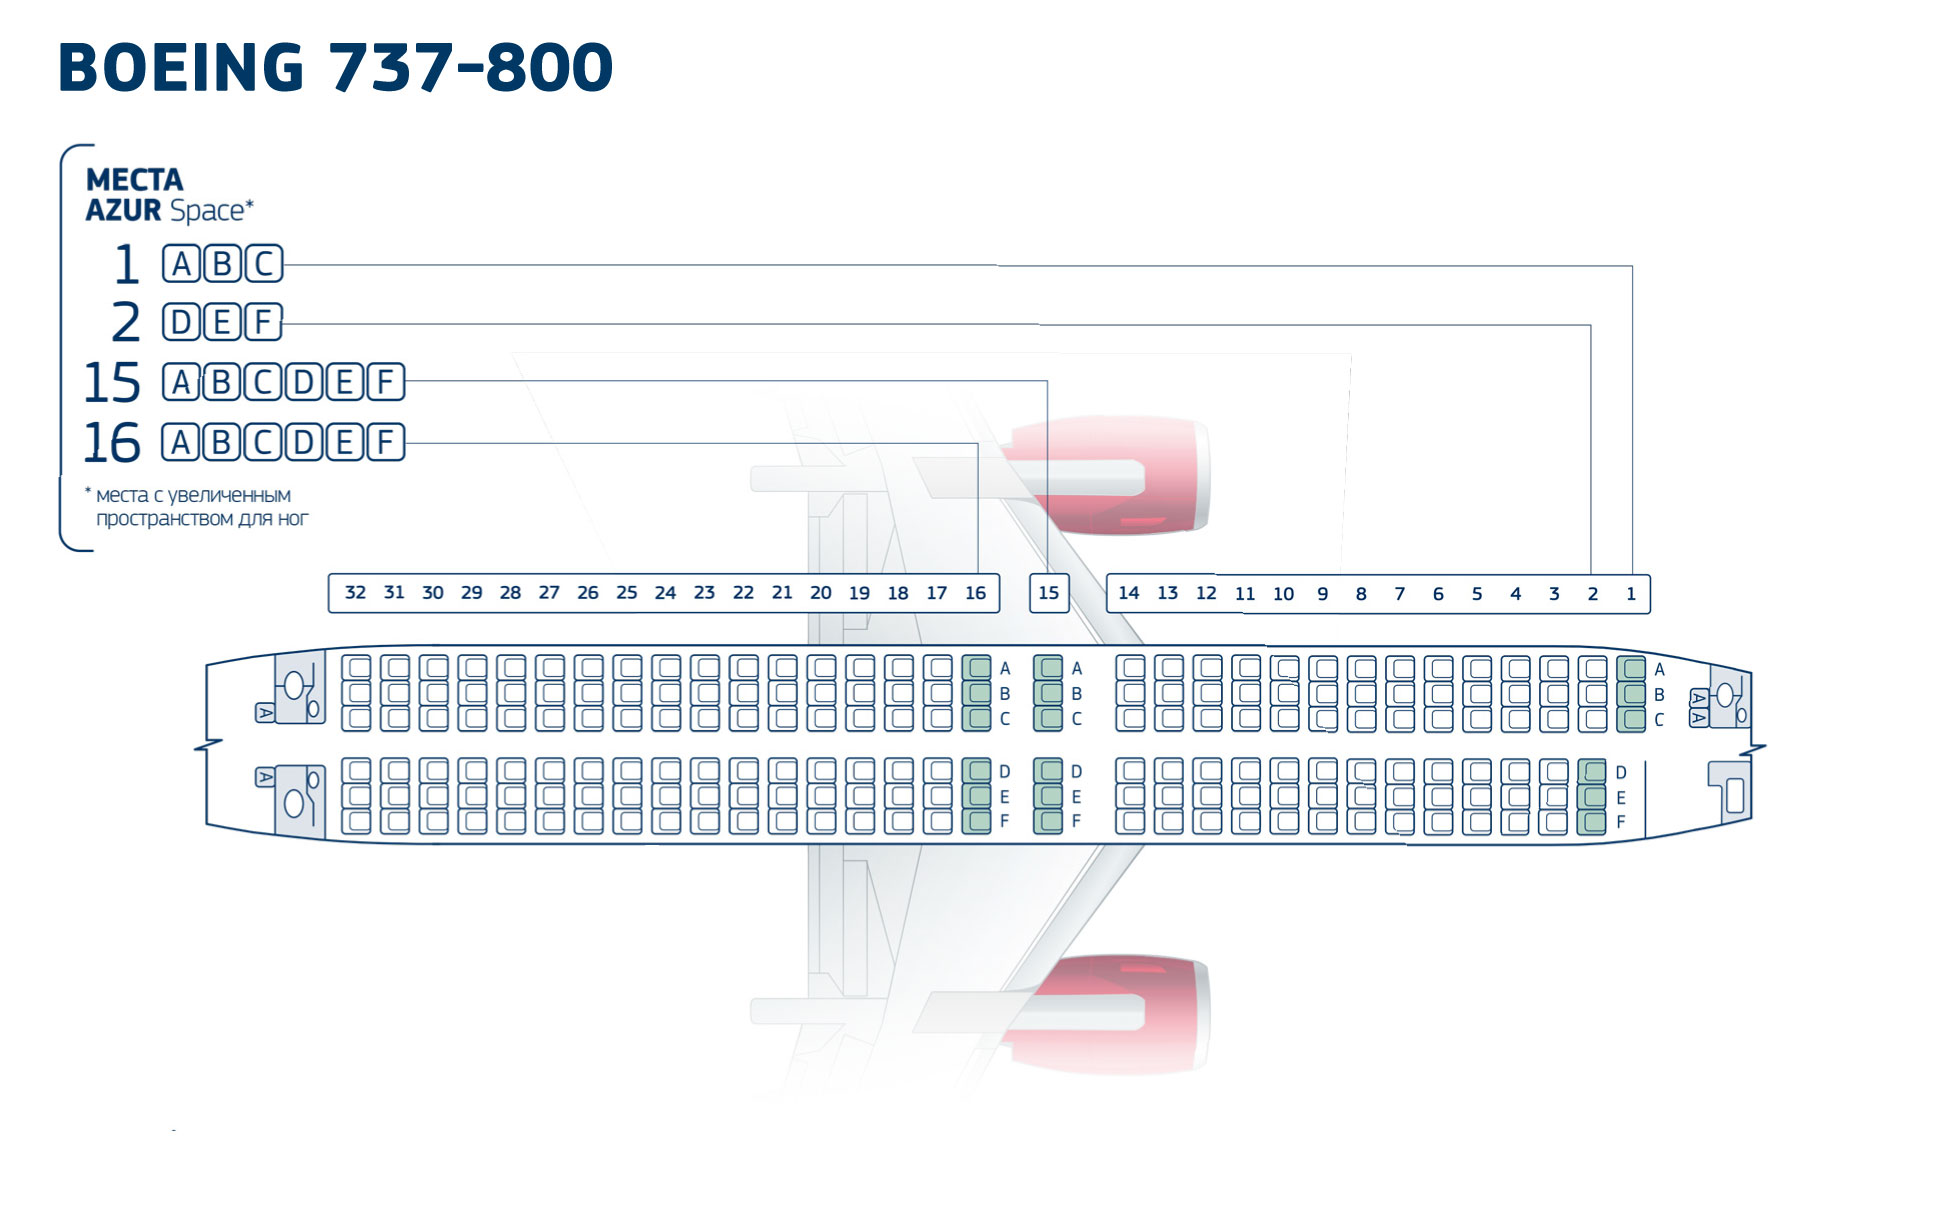 ООО «АЗУР эйр», + Our Air Fleet: Boeing 737-800